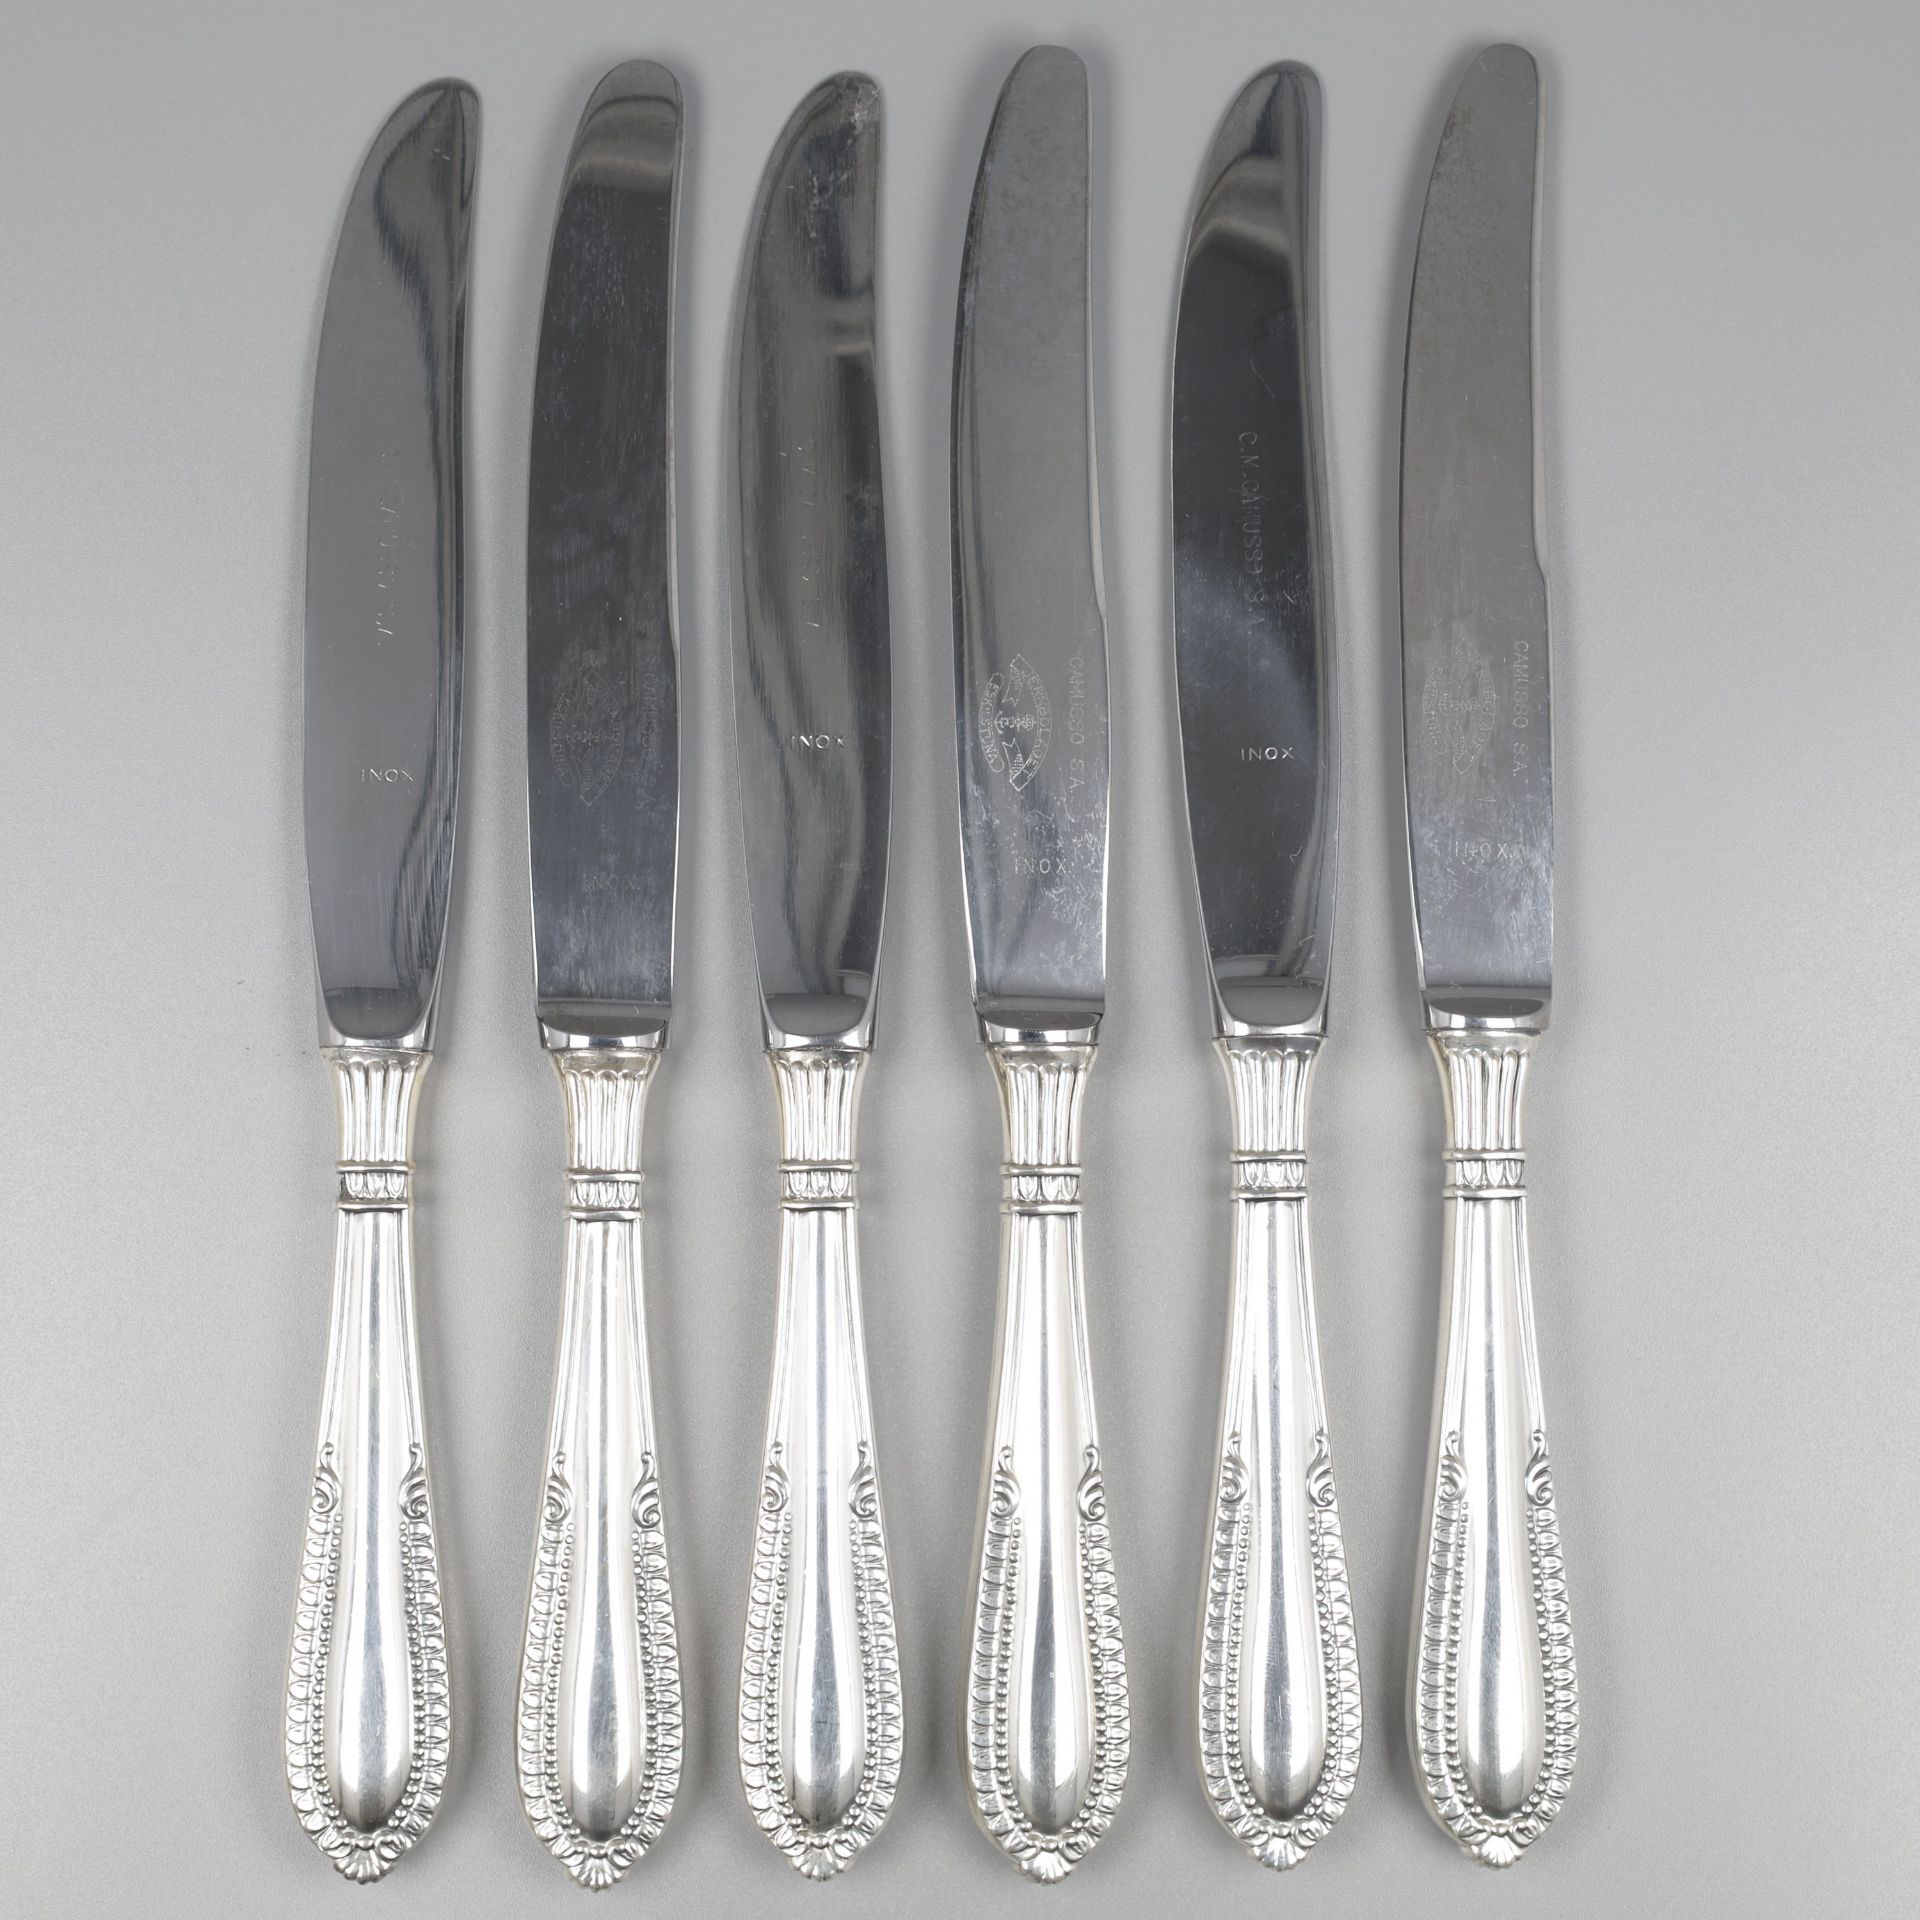 No reserve - 6-piece set of knives, model Grand Paris, silver.
